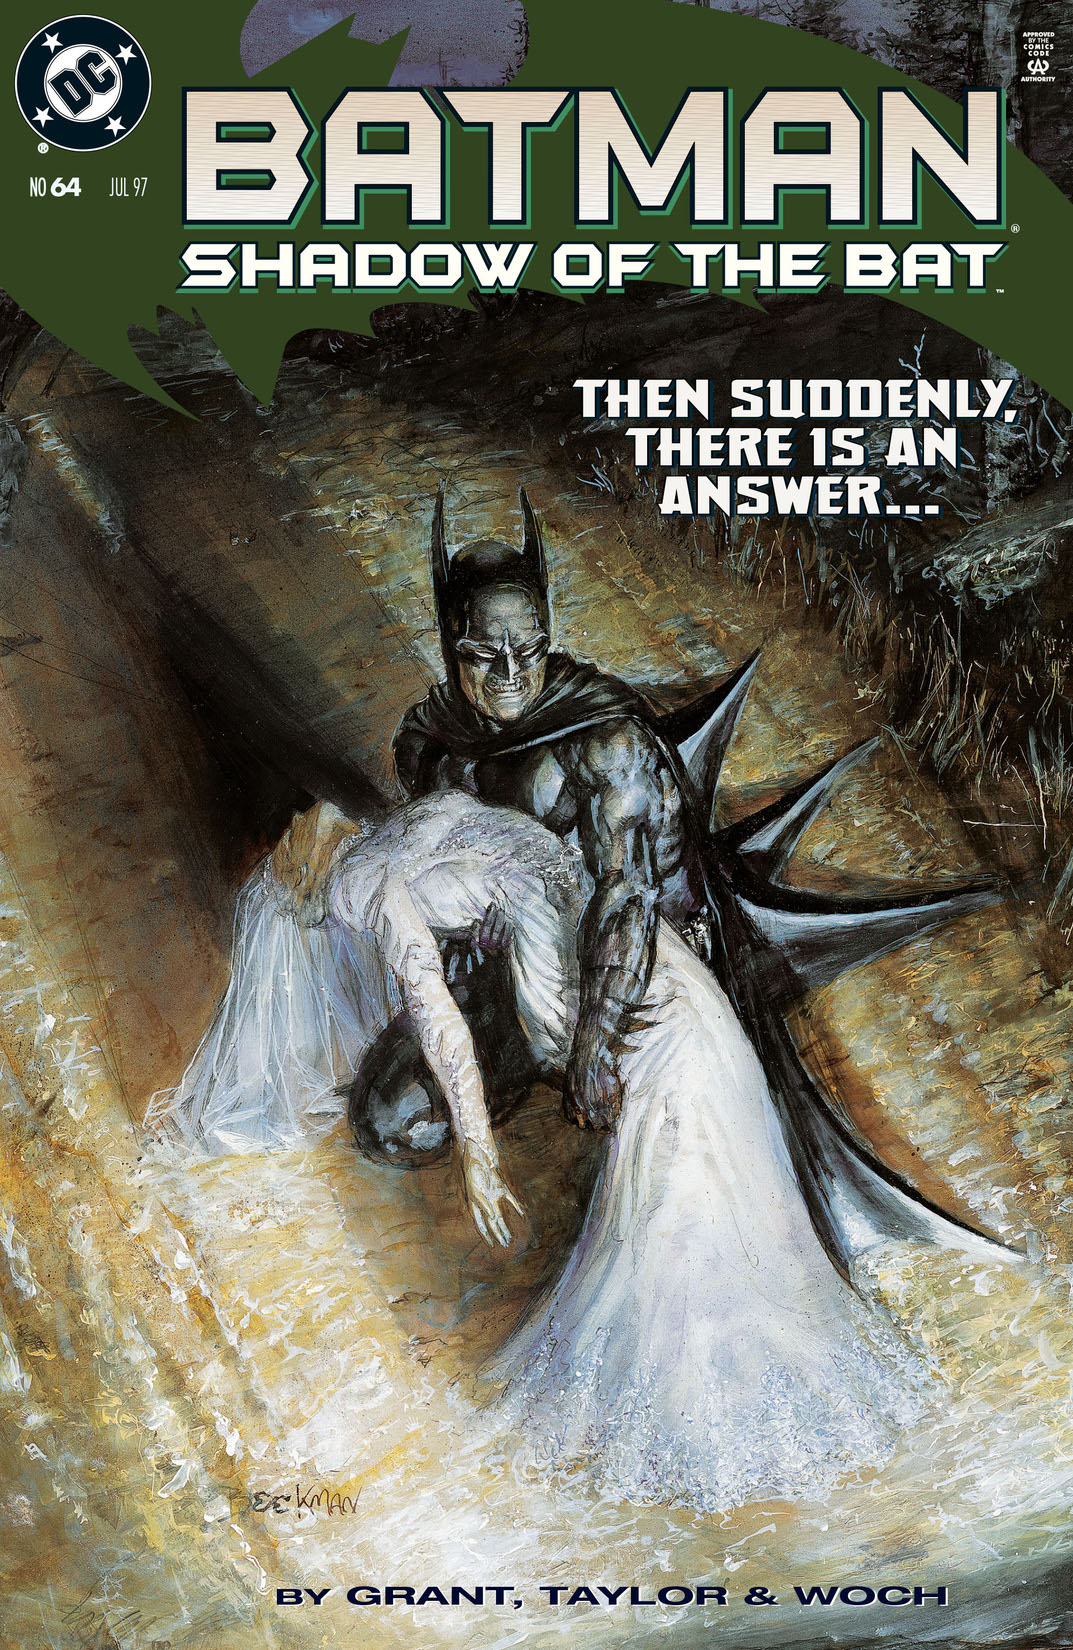 Batman: Shadow of the Bat #64 preview images